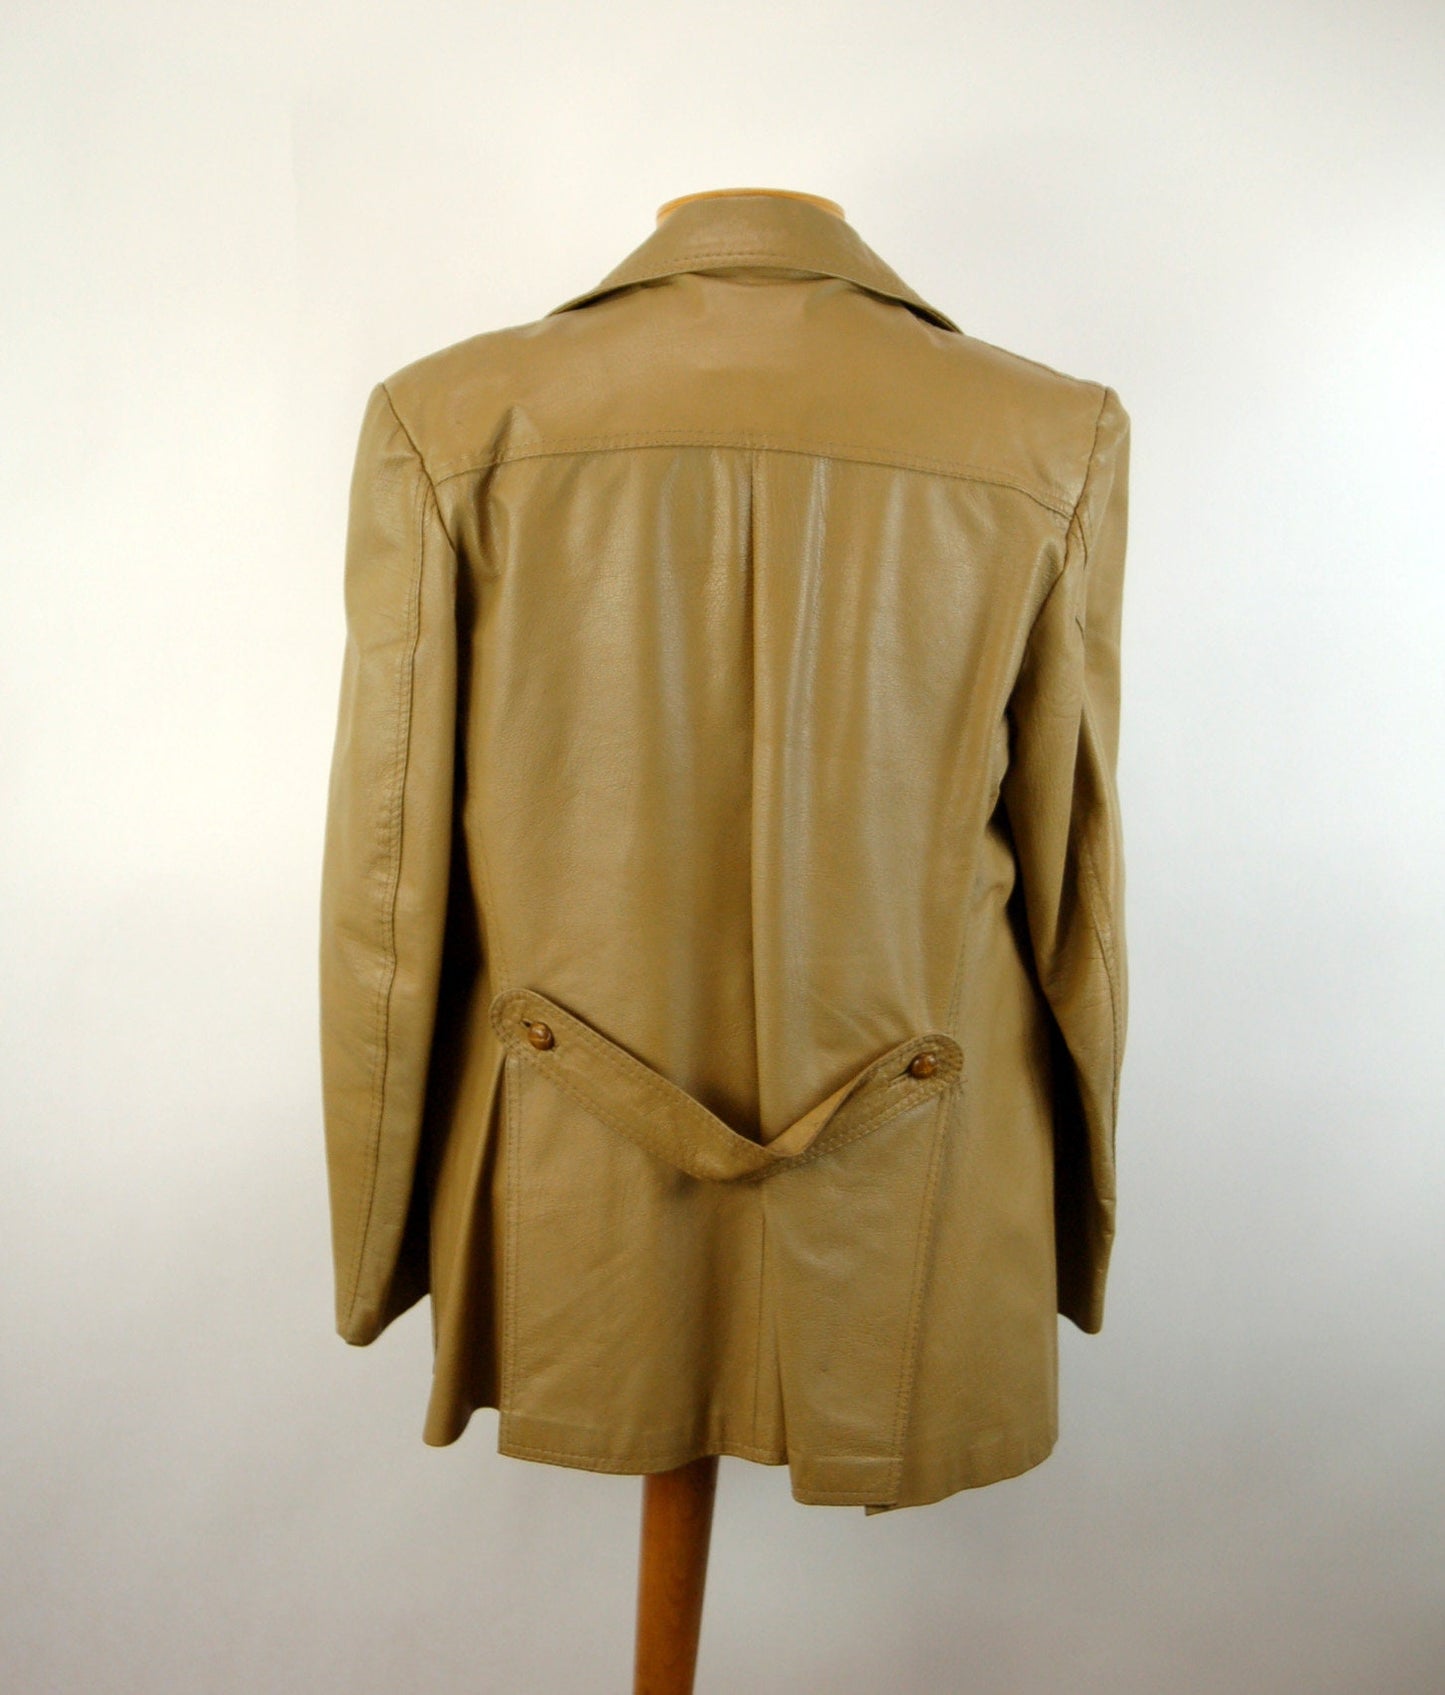 1970s leather jacket blazer tan Original Mont western wear Size M